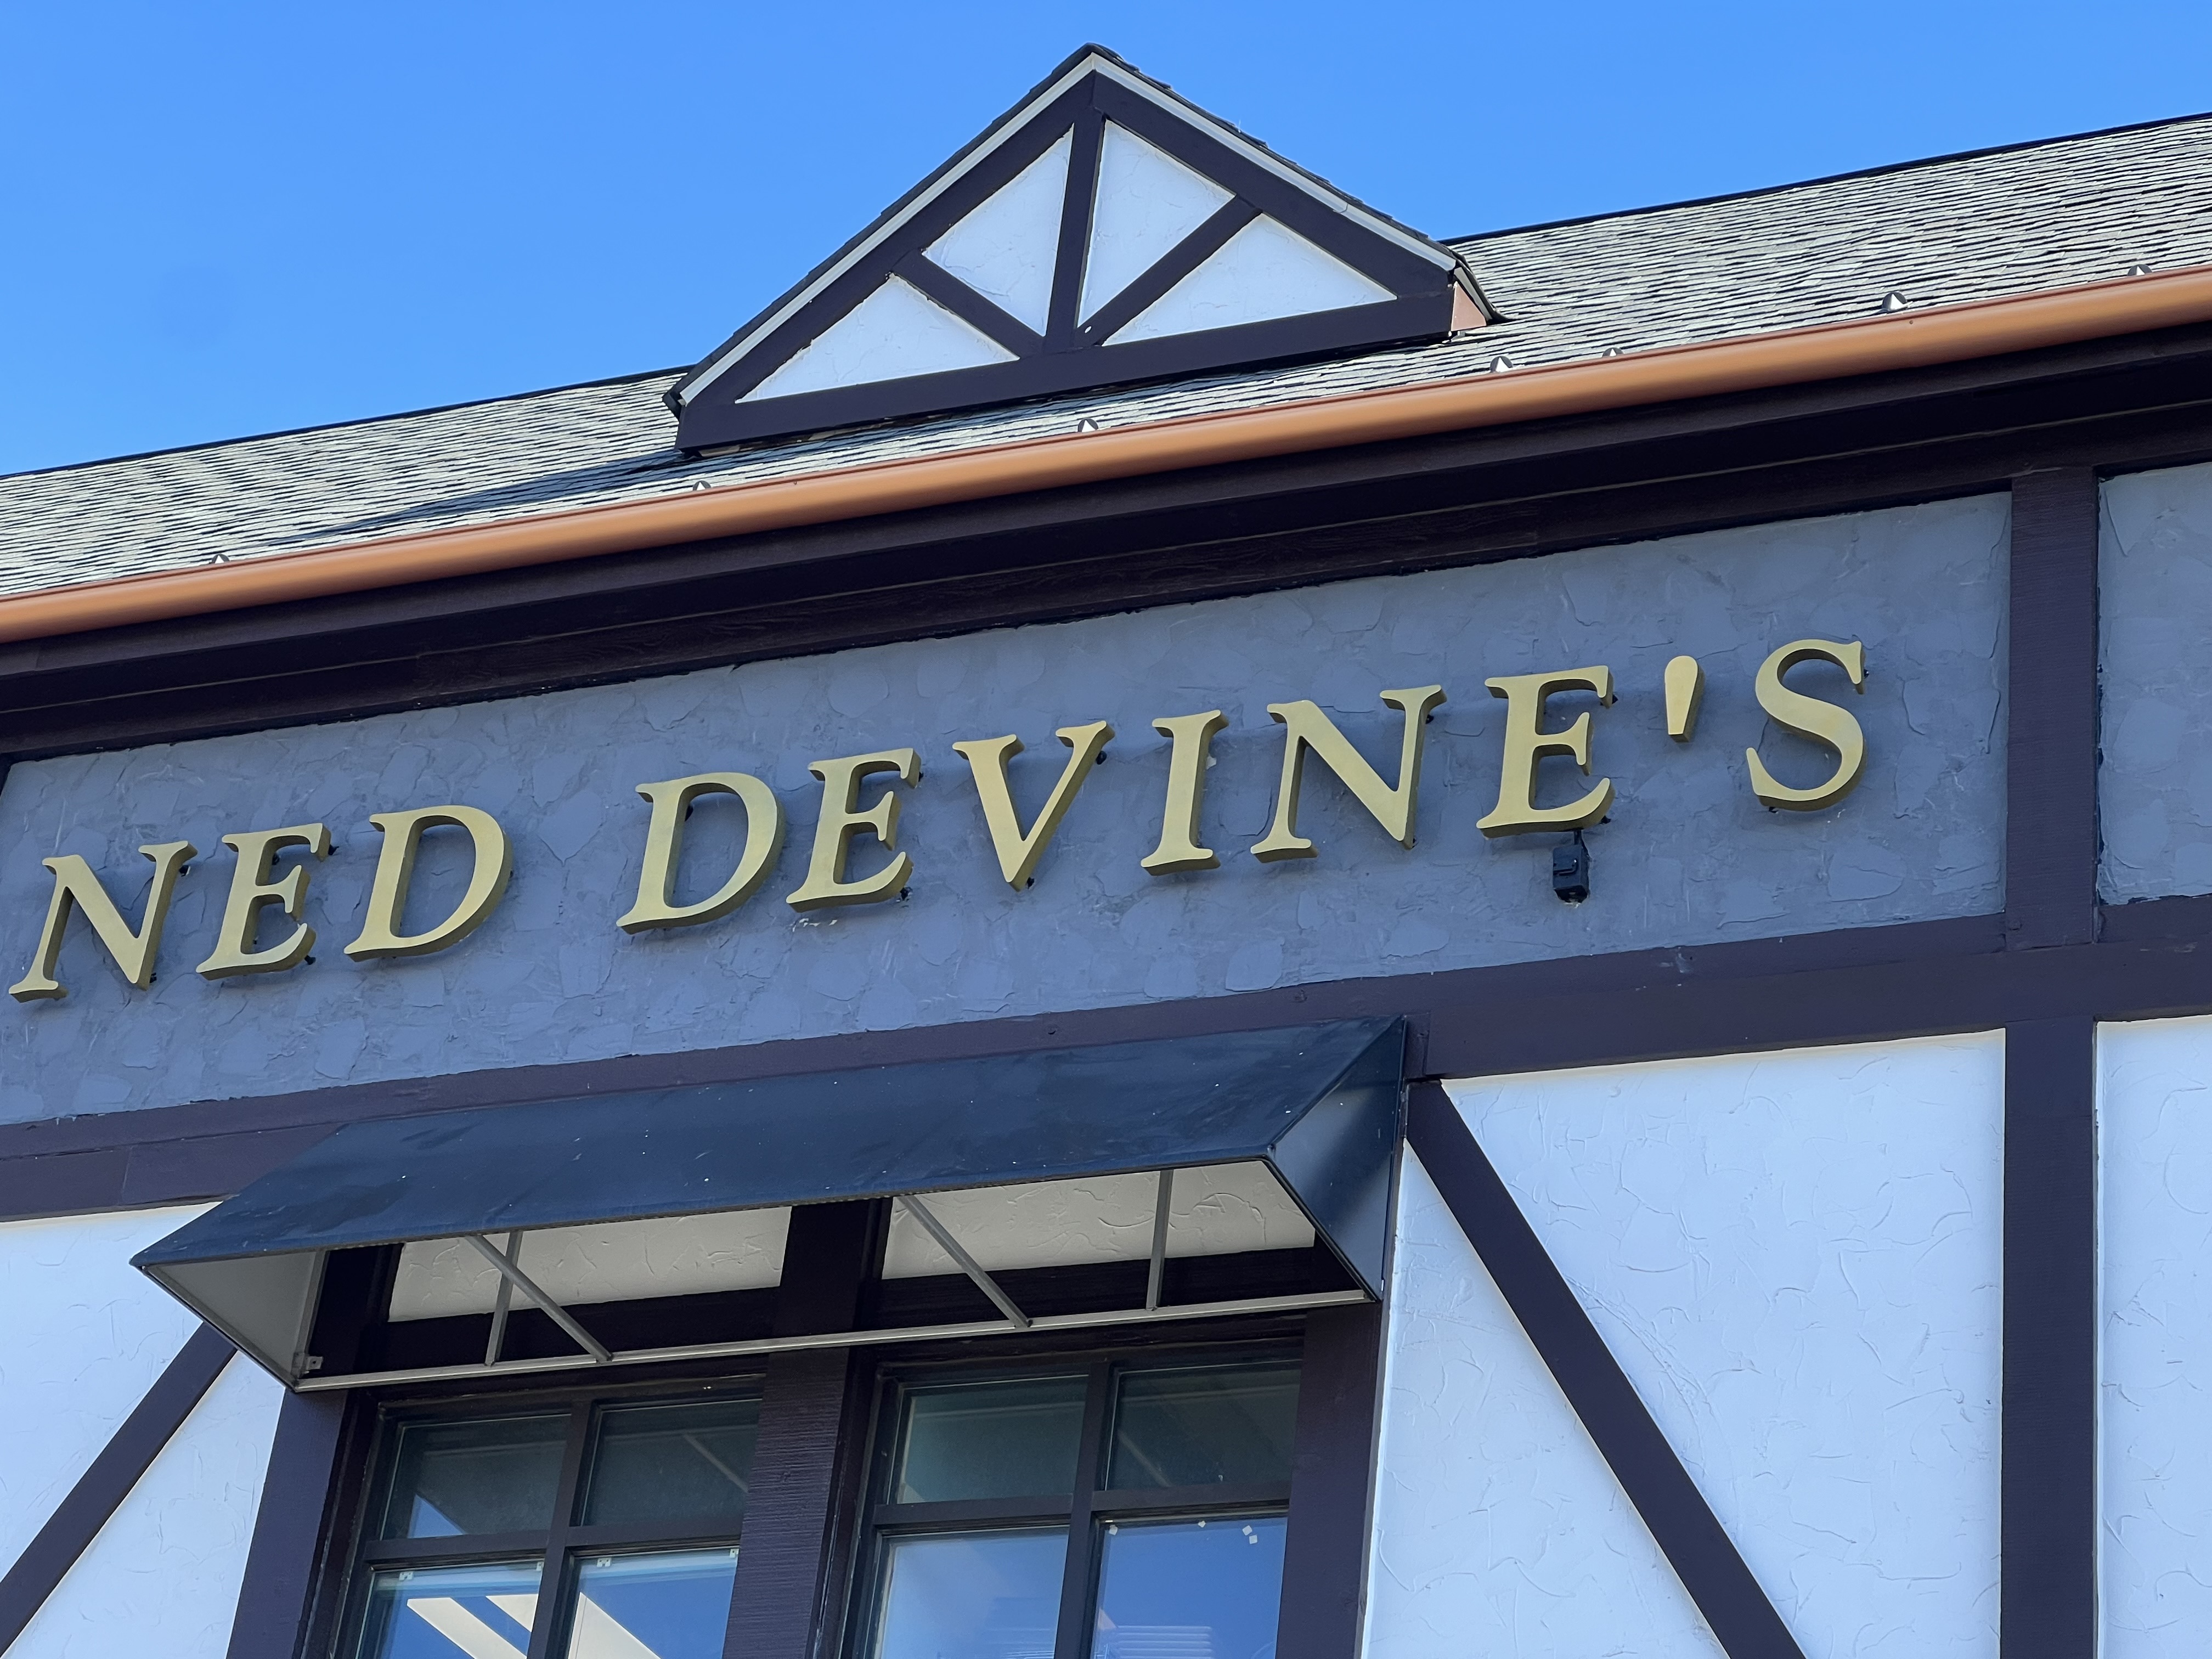 Ned Devine's 